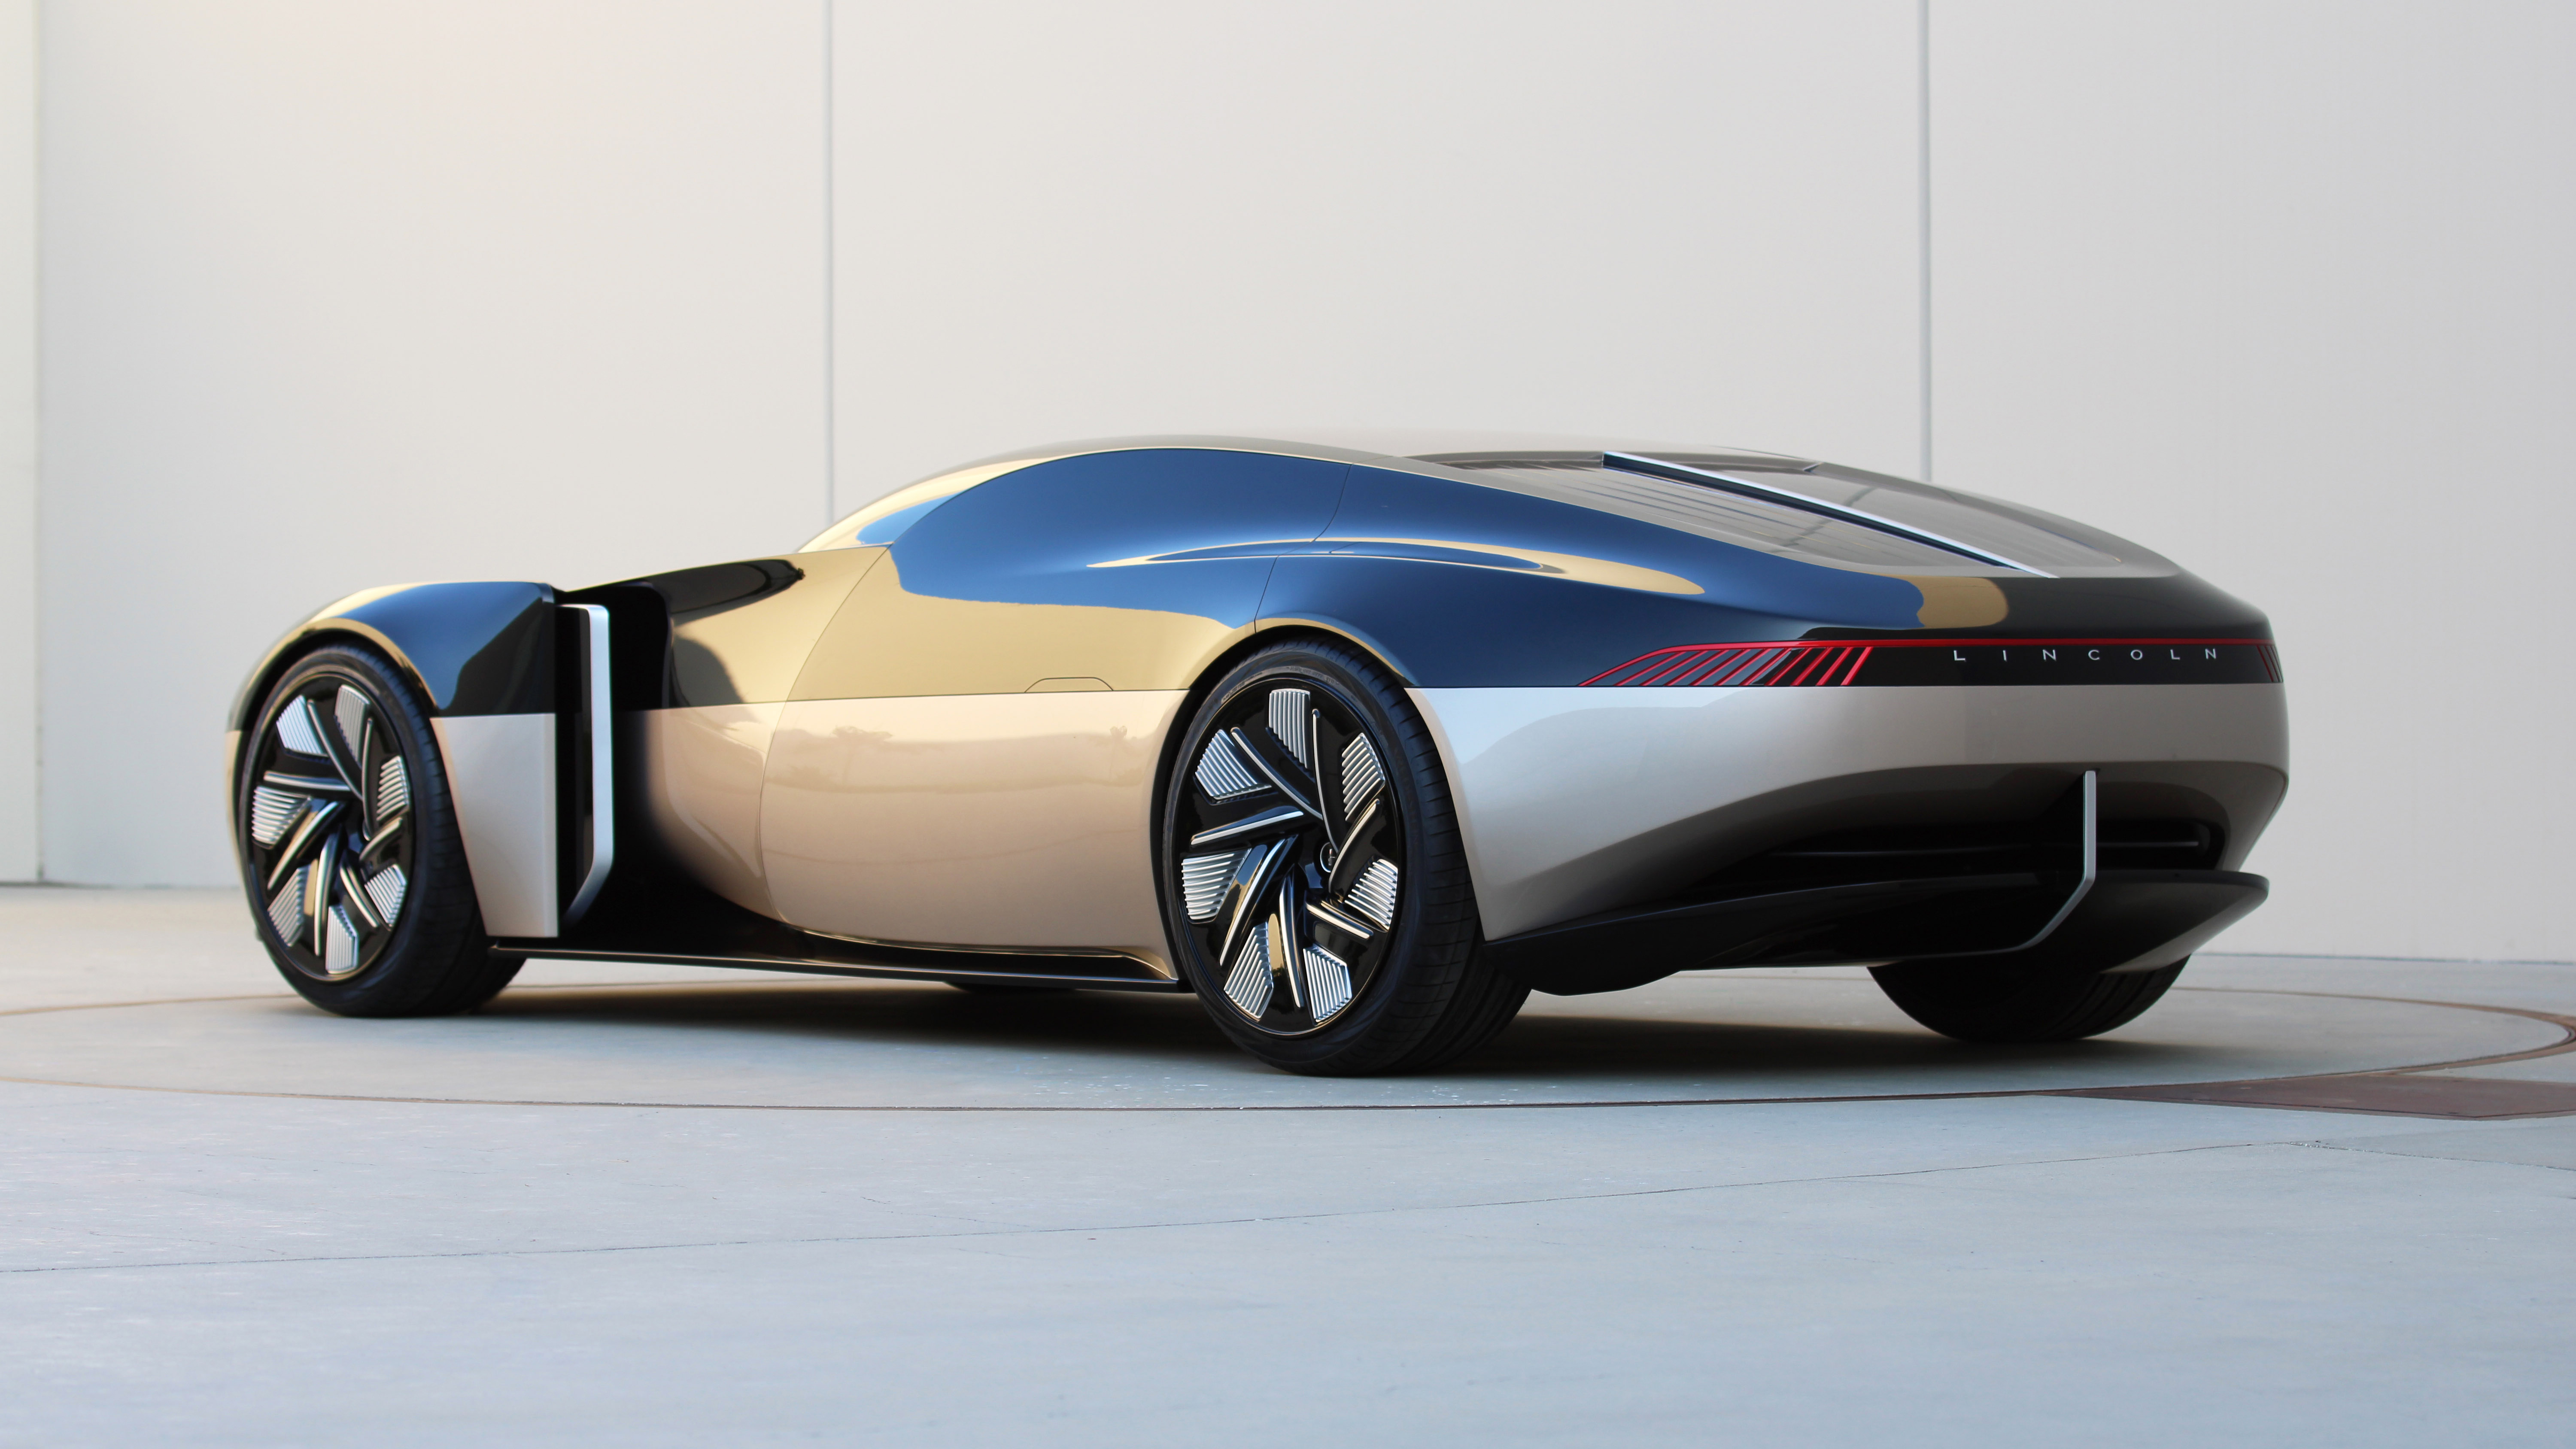 Zastaki.com - Автомобиль Lincoln Anniversary Concept 2021 года вид сзади